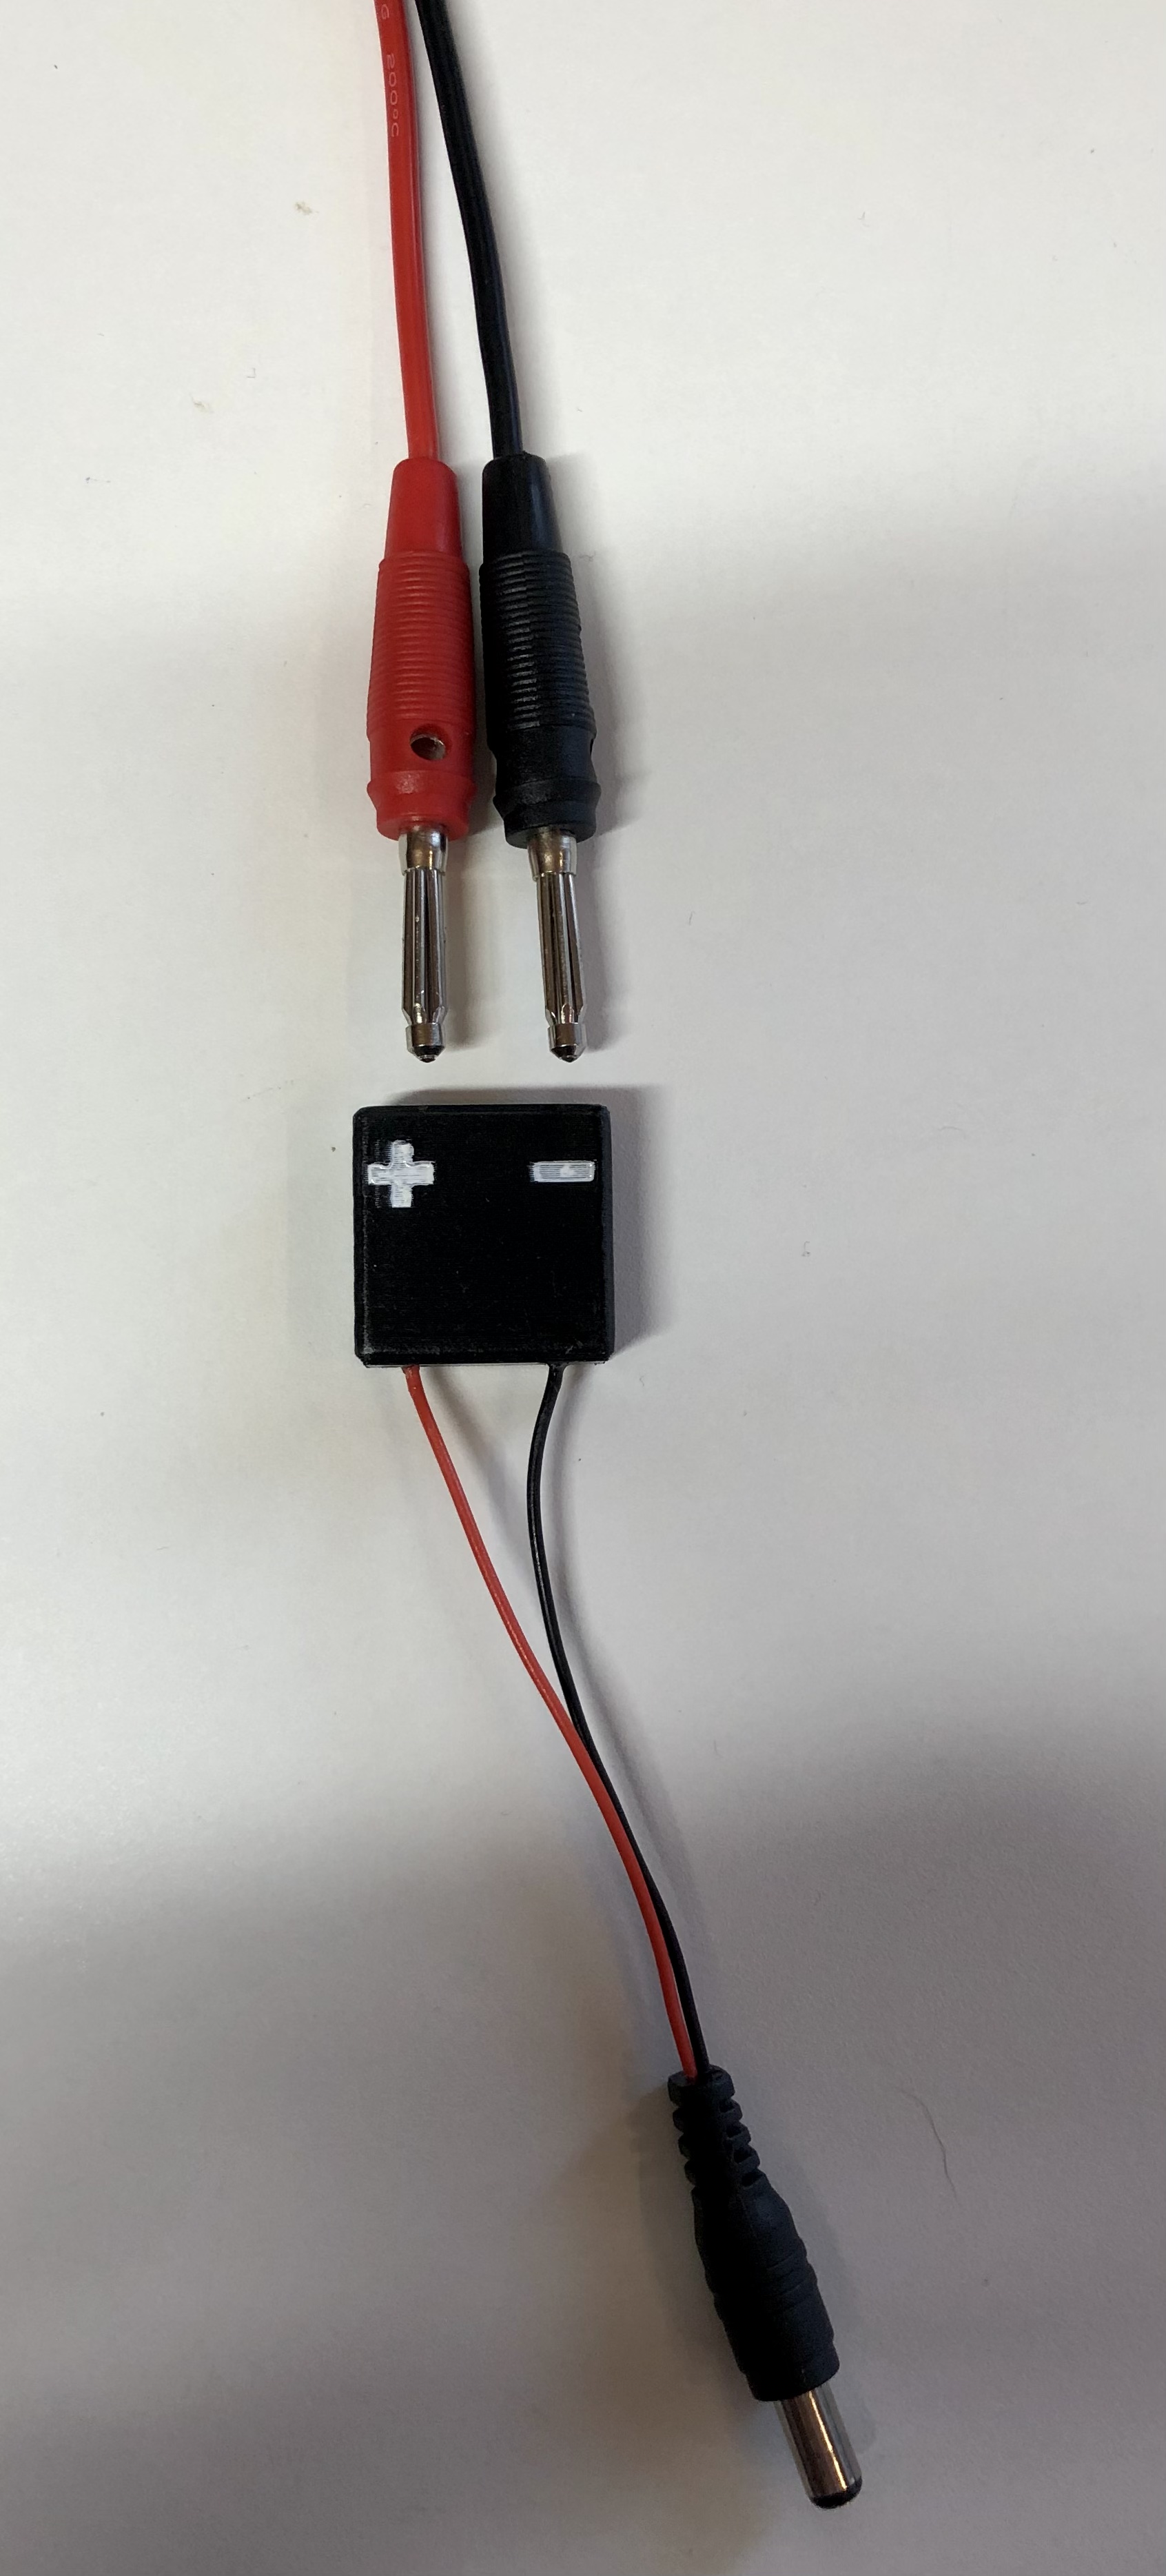 Banana 4mm socket / plug / connector